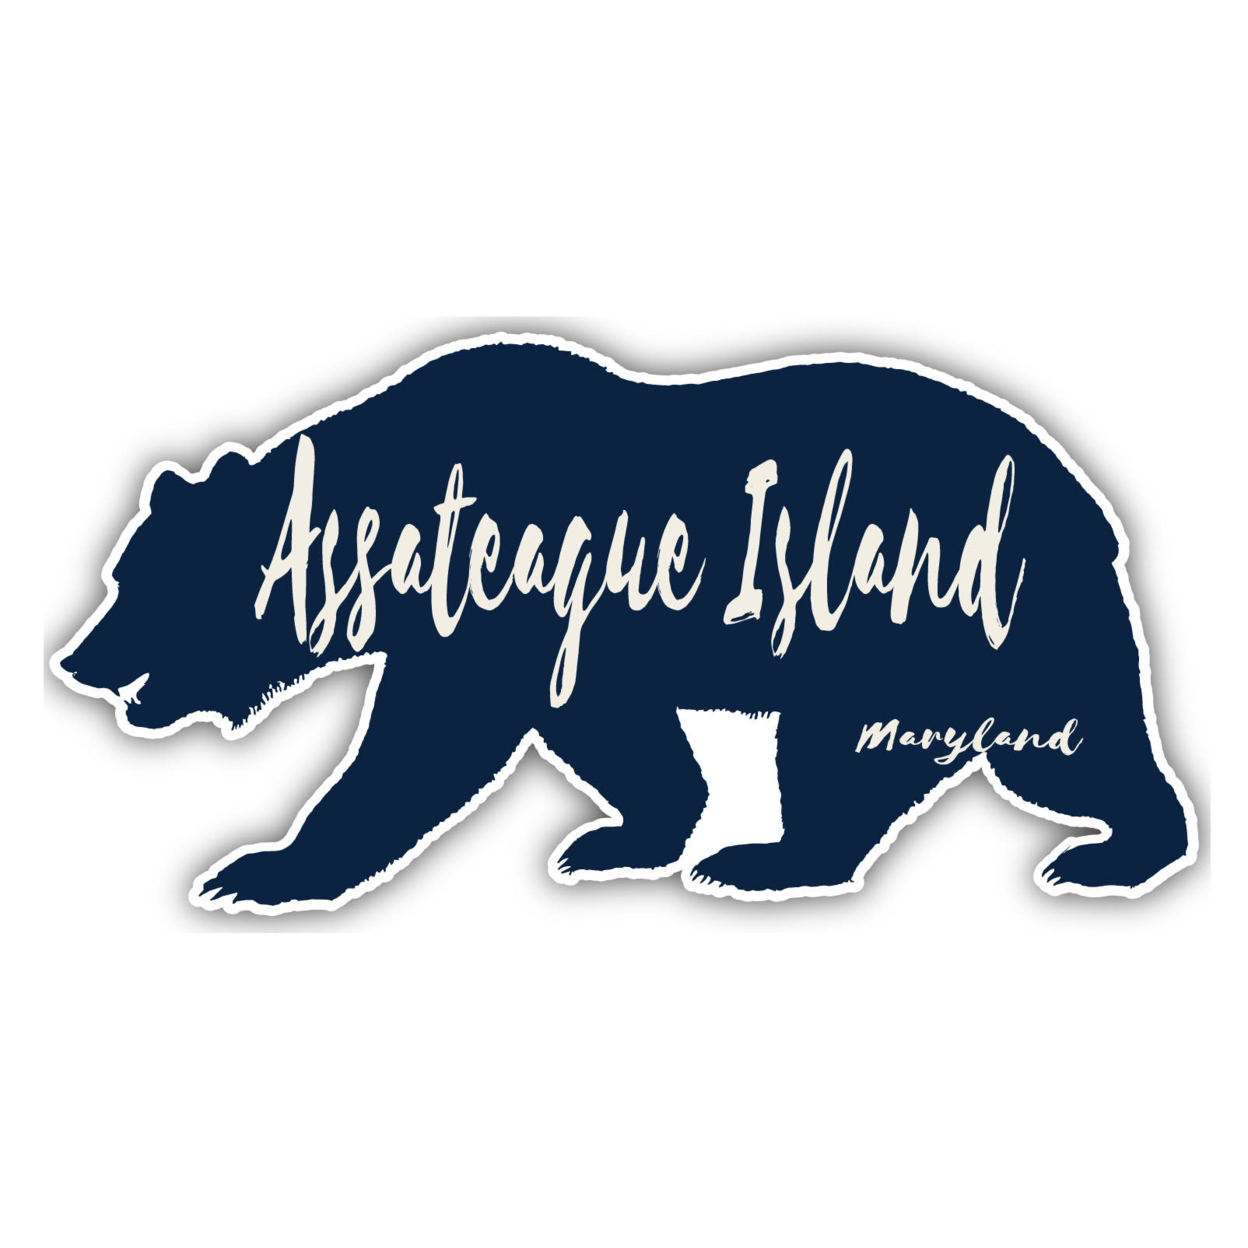 Assateague Island Maryland Souvenir Decorative Stickers (Choose Theme And Size) - Single Unit, 8-Inch, Bear